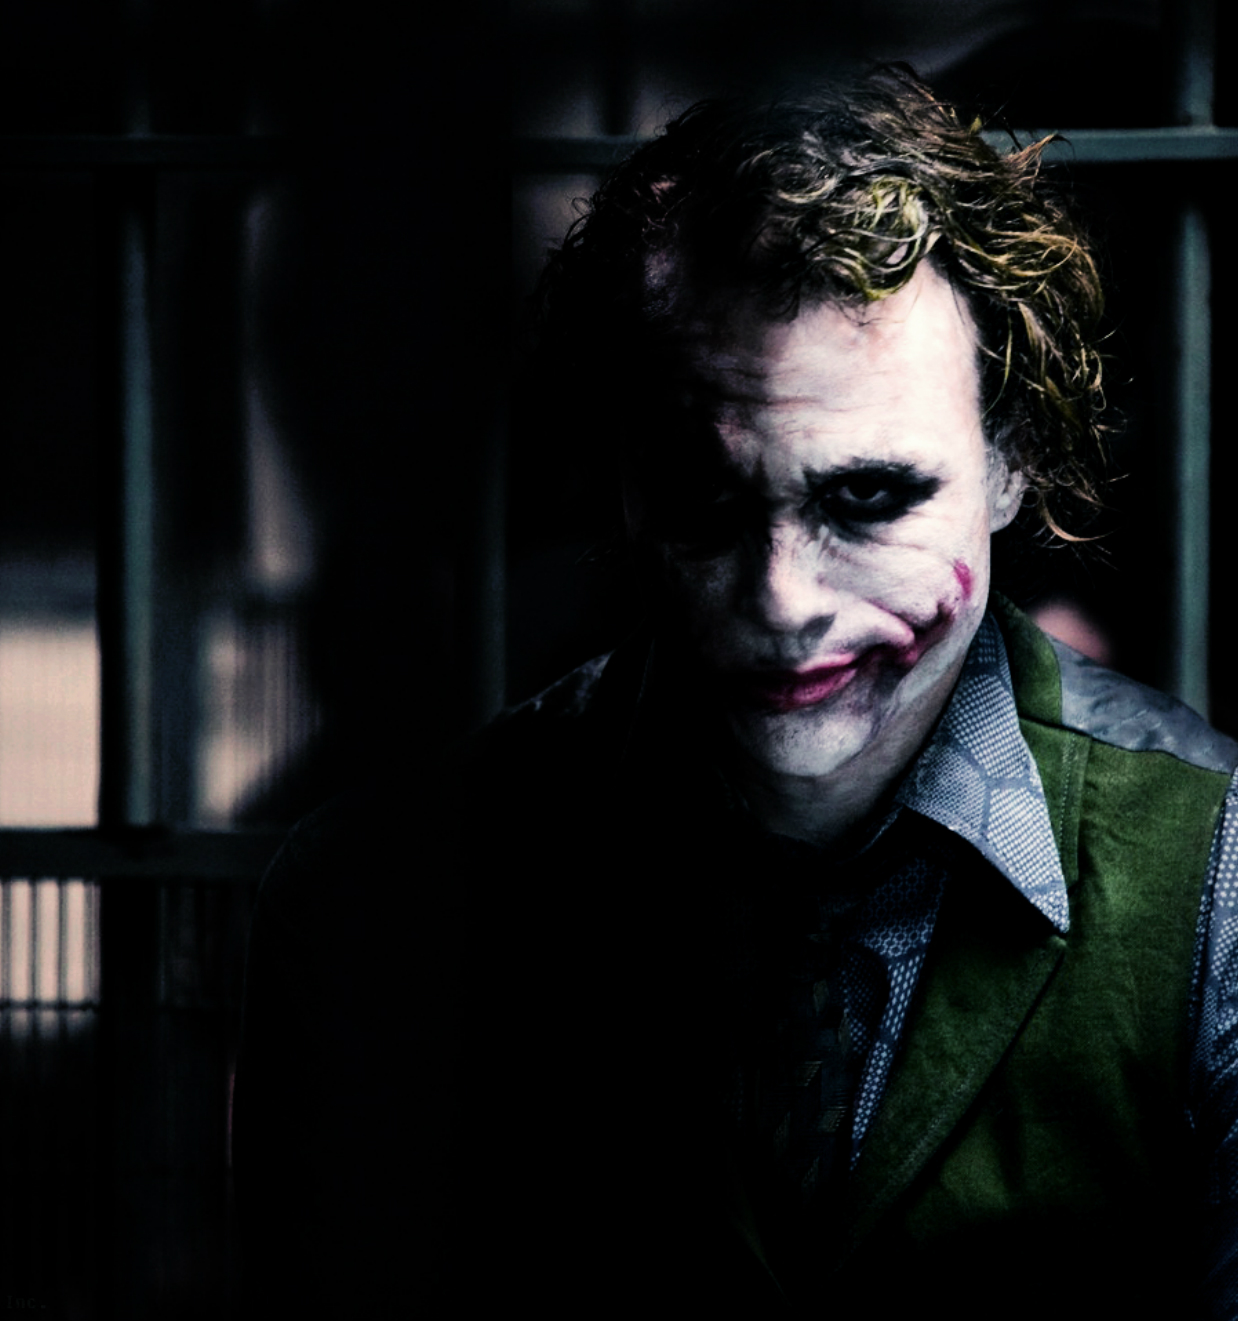 The Joker - The Joker Photo (30769505) - Fanpop